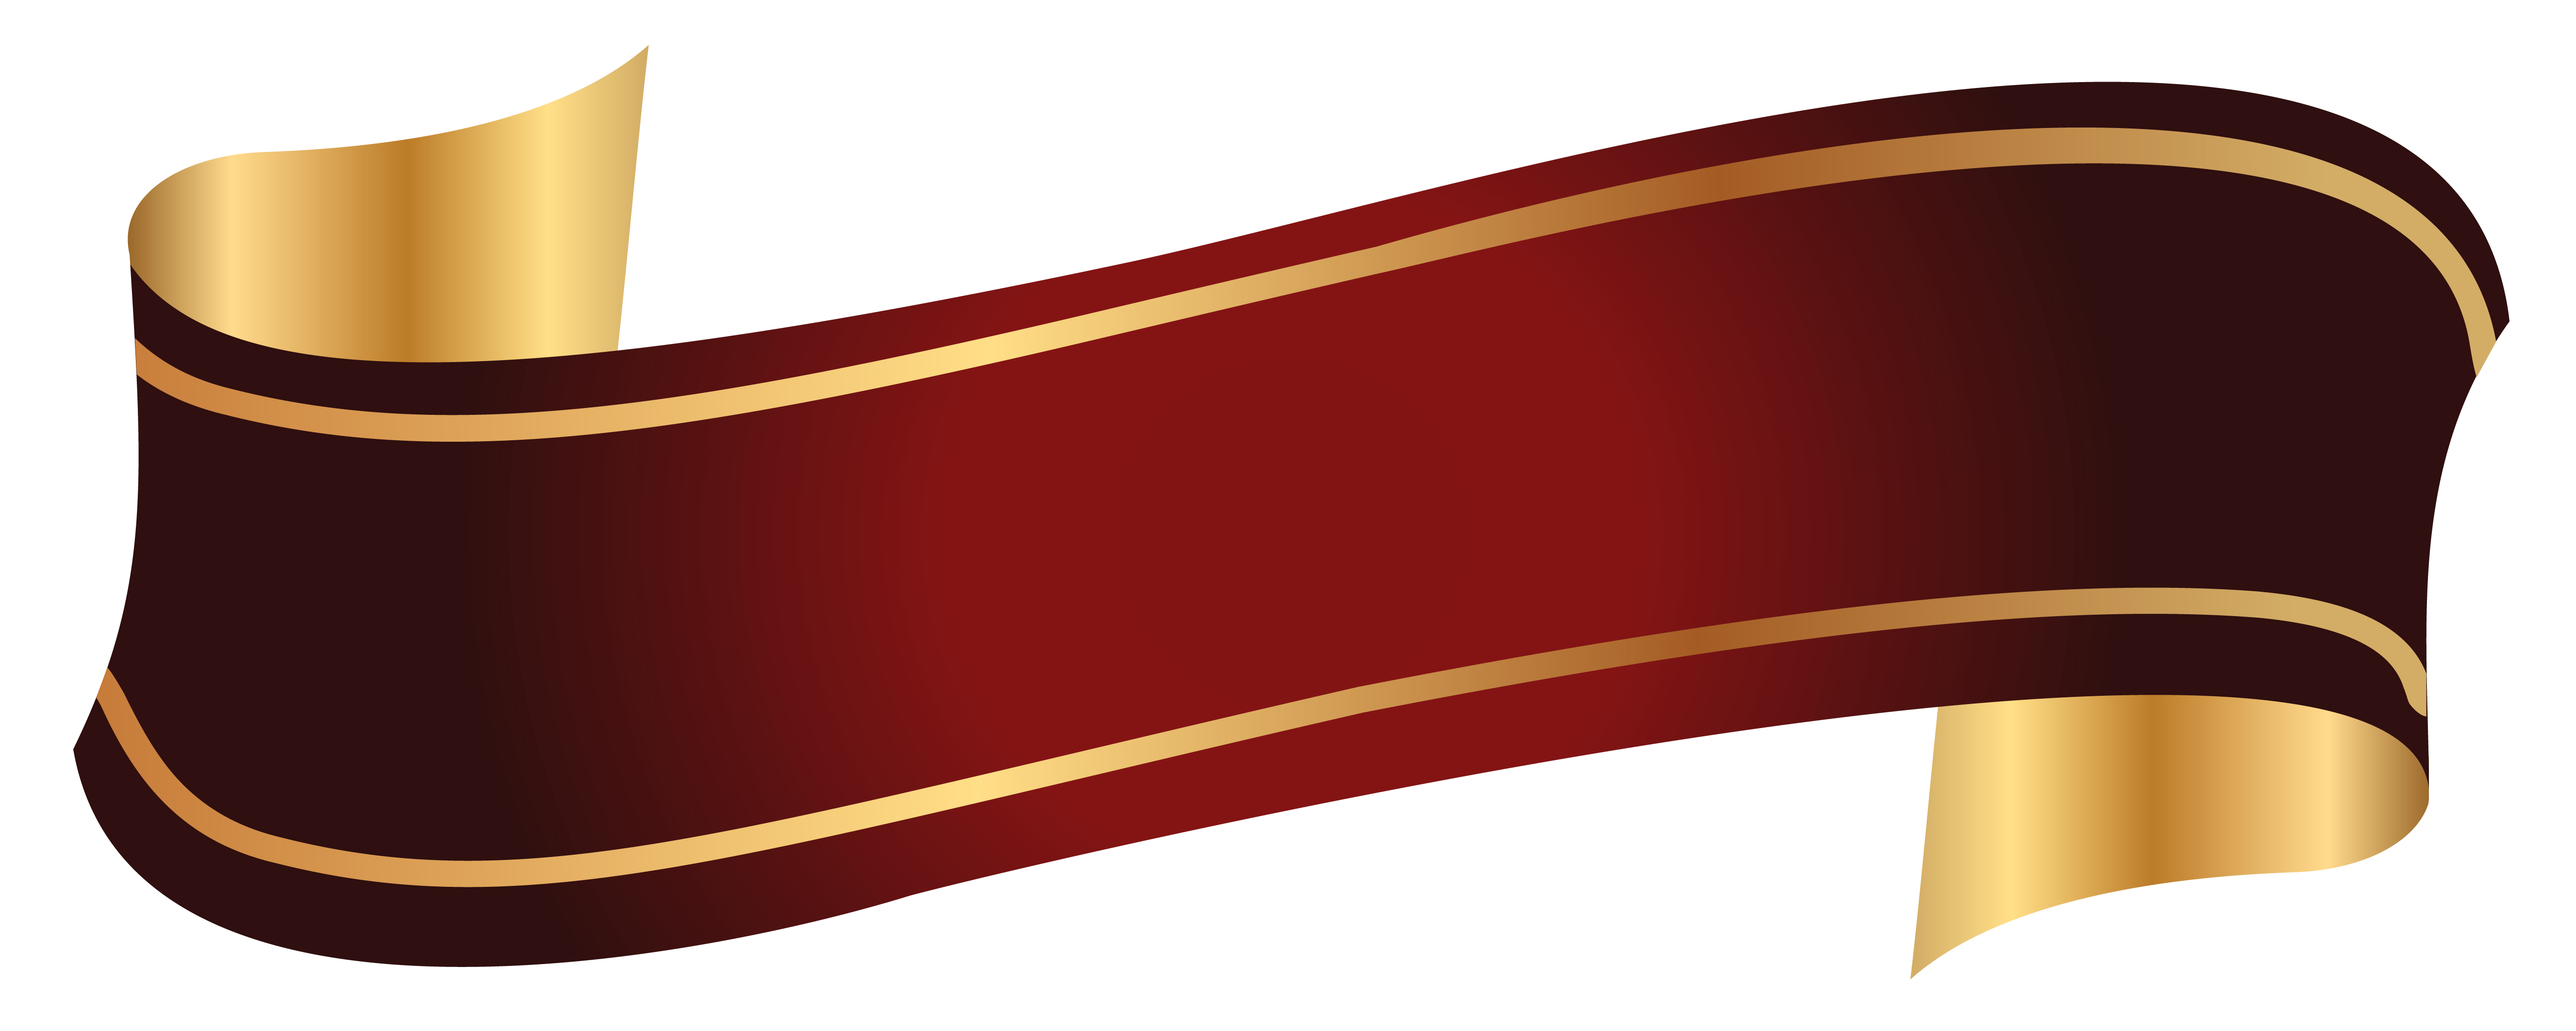 ribbon banner design png - Clip Art Library